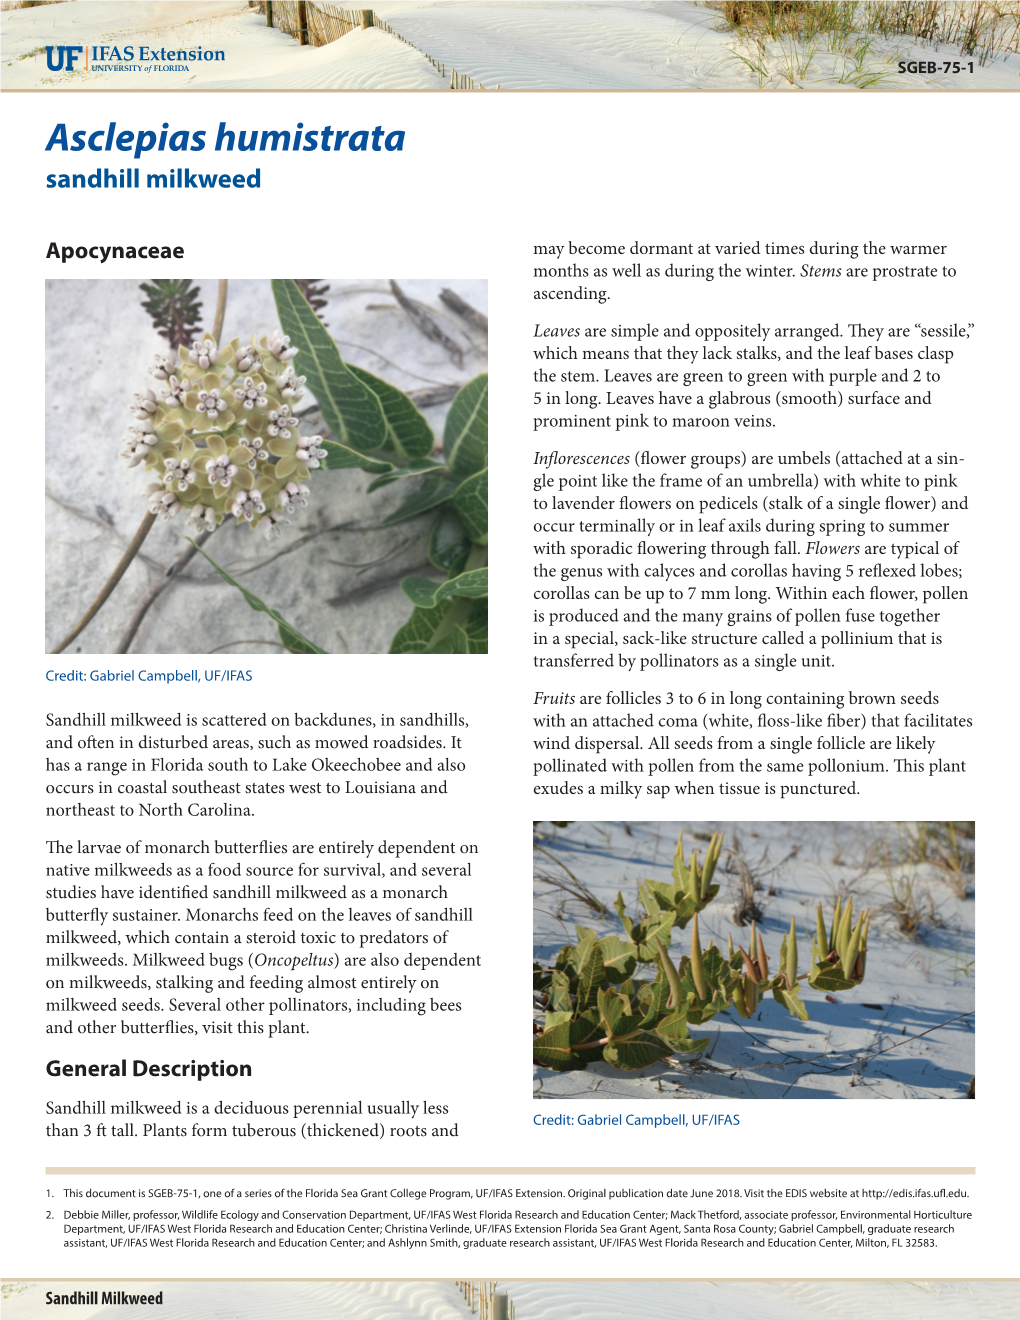 Sandhill Milkweed, Asclepias Humistrata